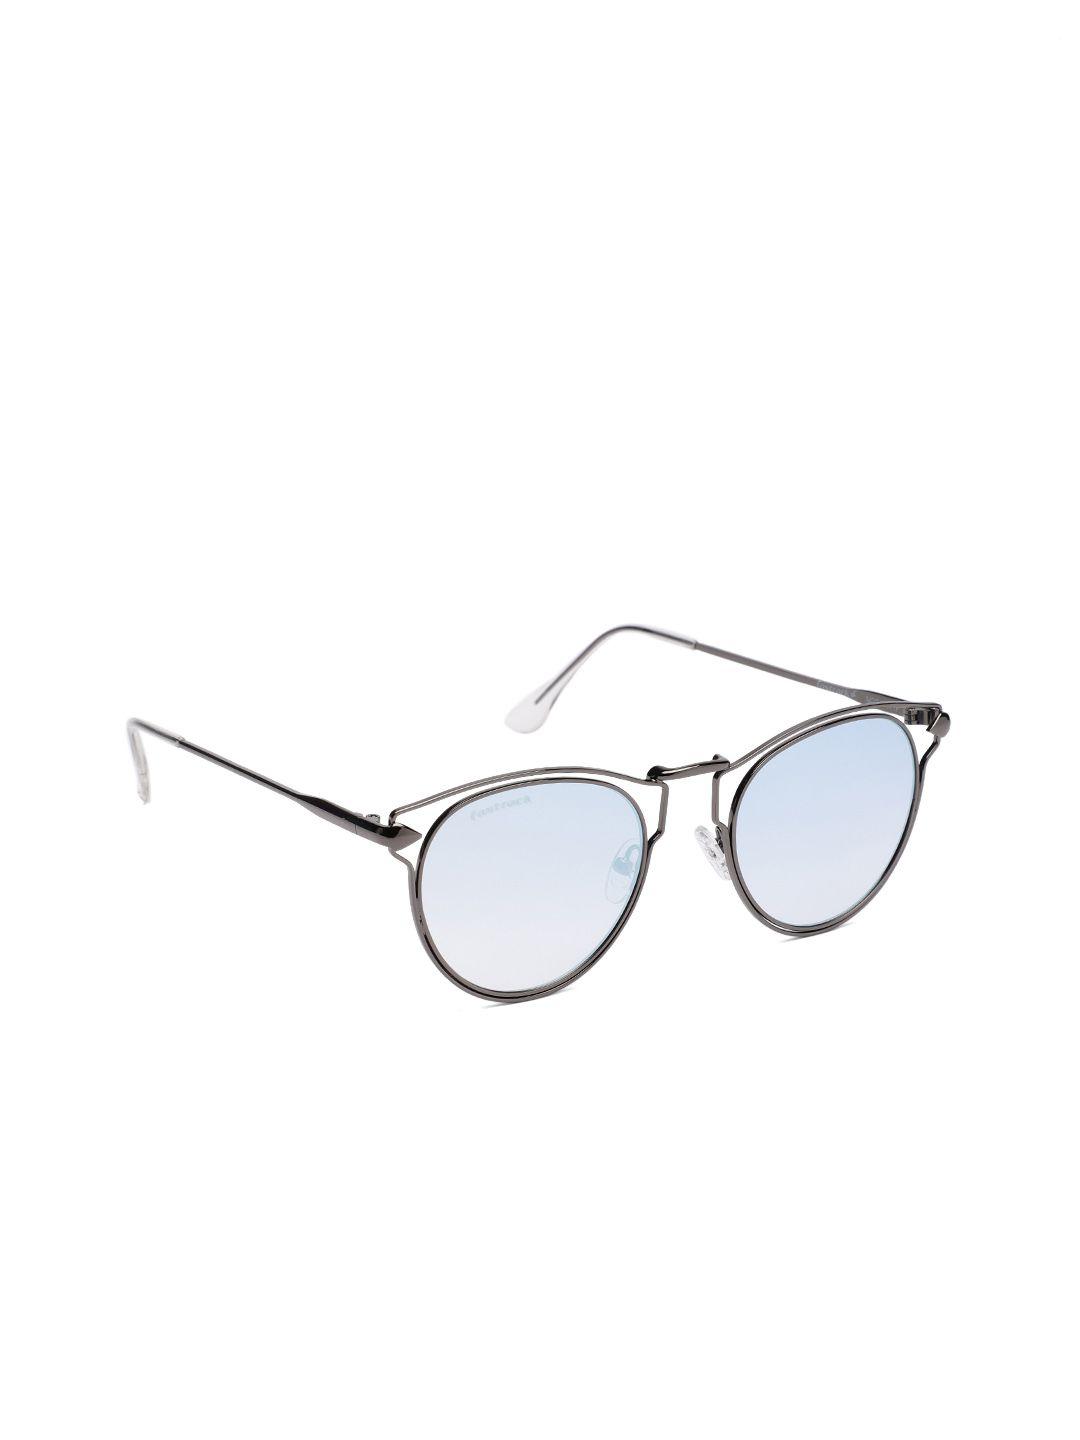 fastrack-women-oval-sunglasses-m234pr1f